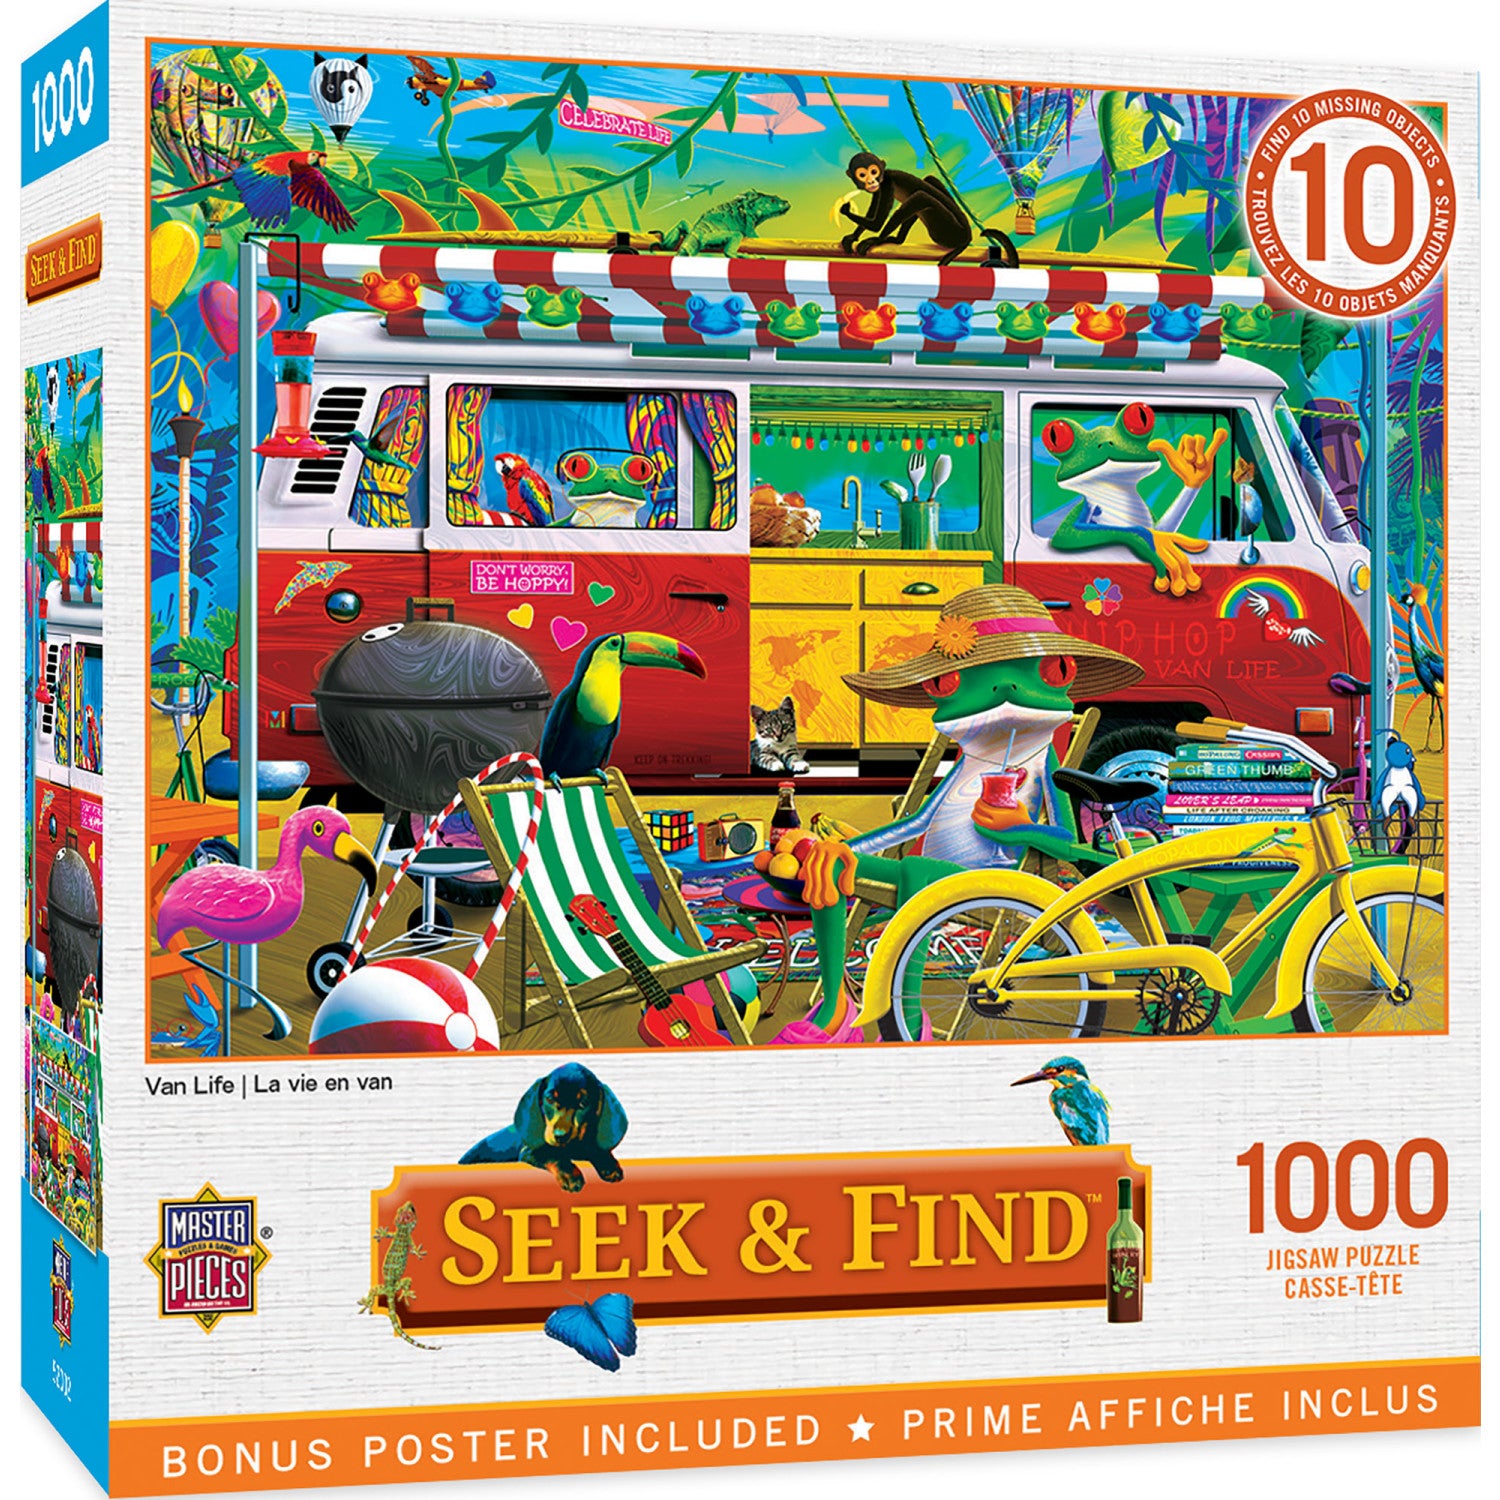 Seek & Find - Van Life 1000 Piece Jigsaw Puzzle